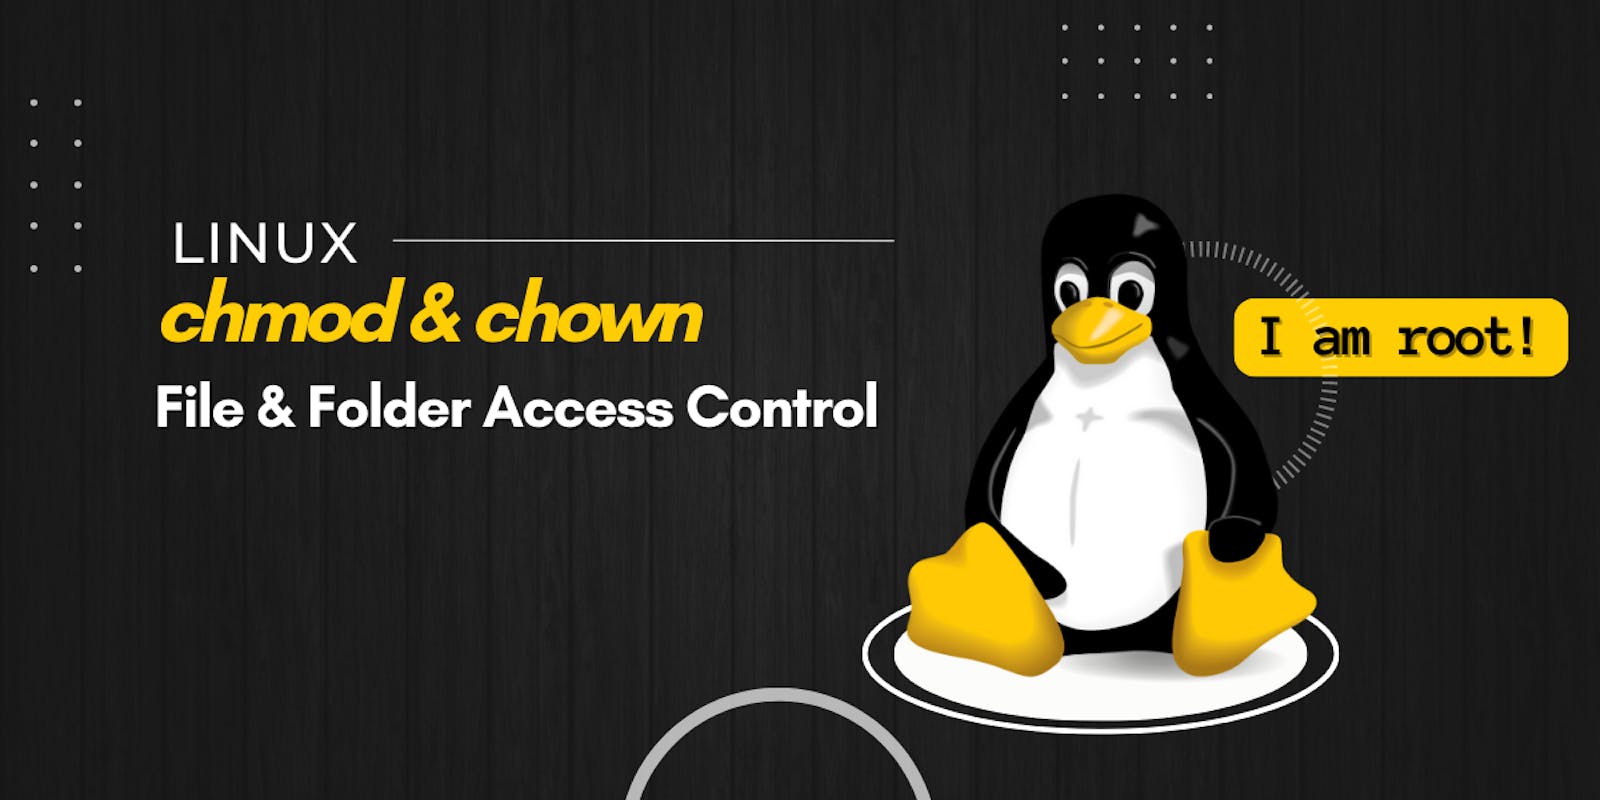 LINUX: chmod & chown — The File & Folder Access Control